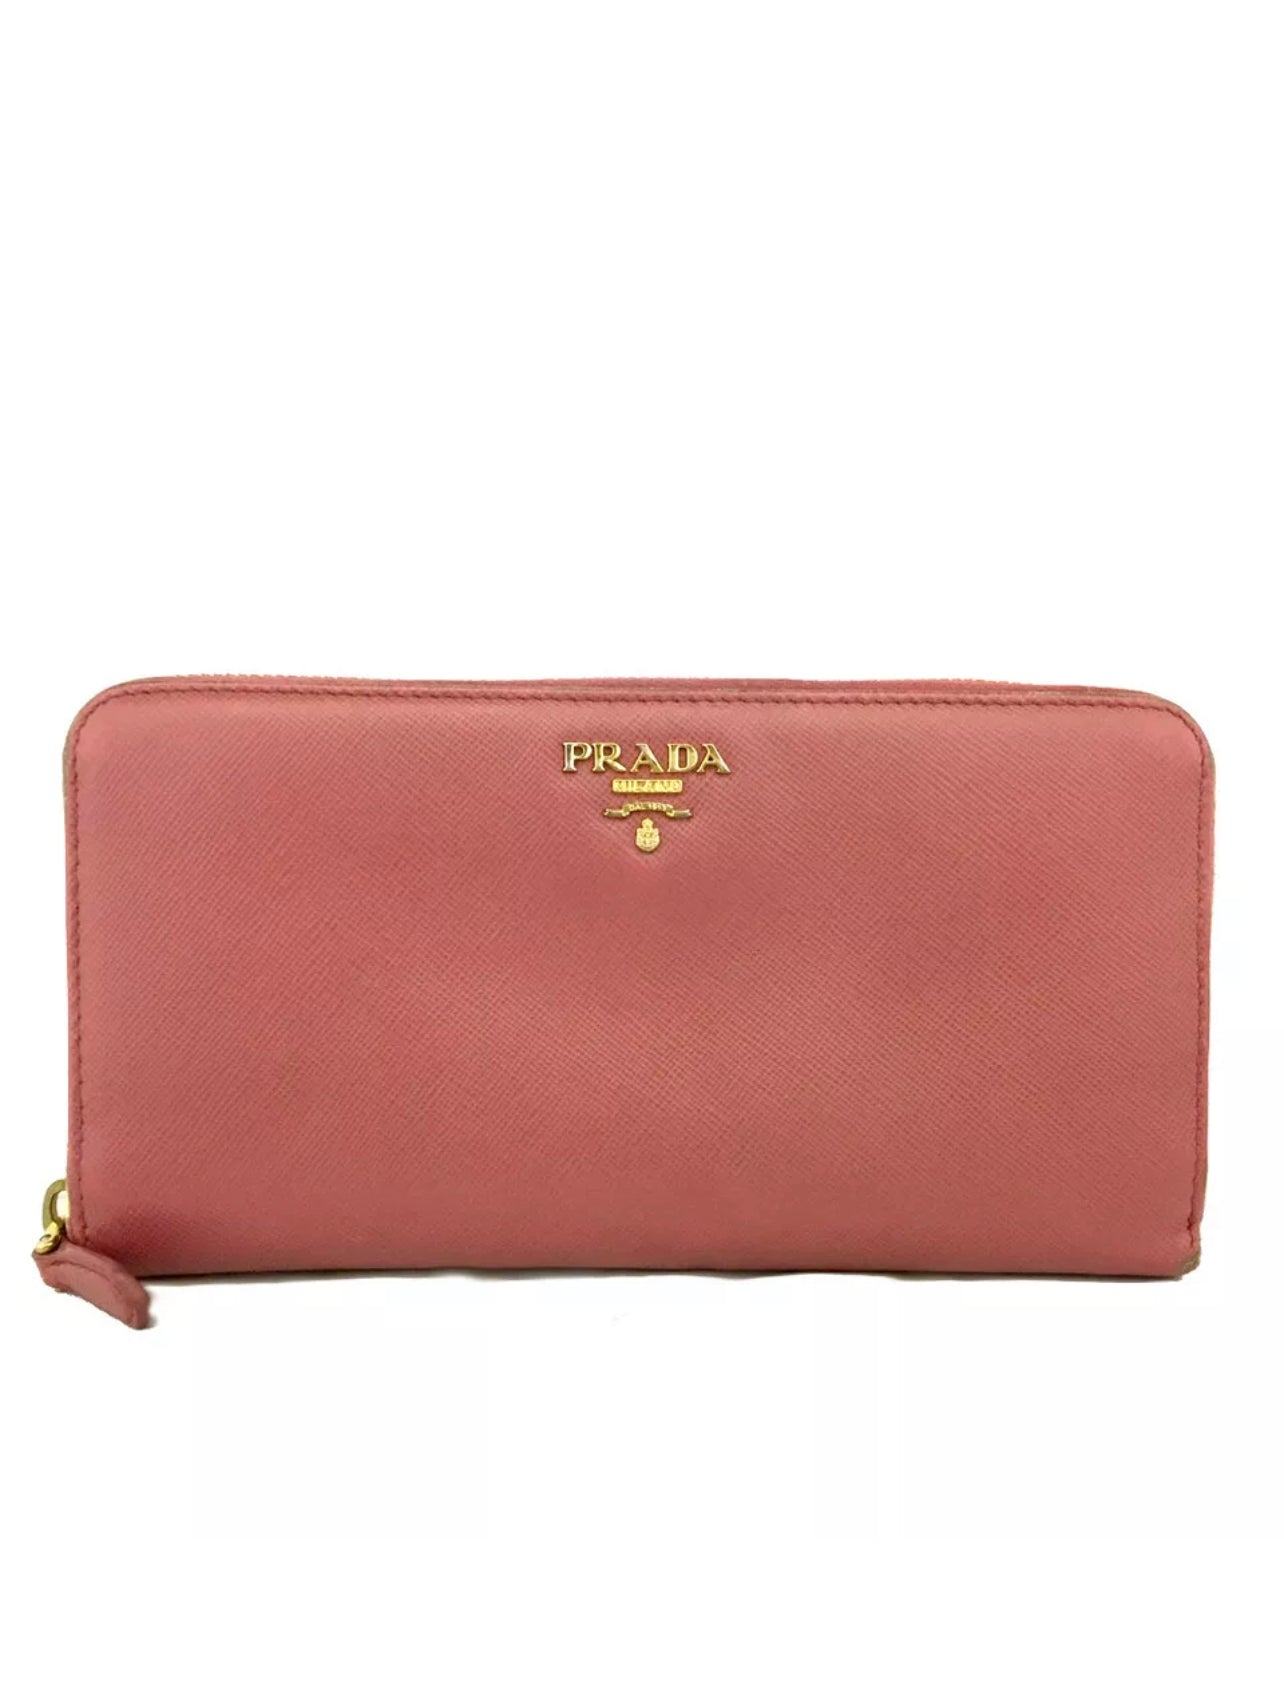 PRELOVED PRADA Saffiano Pink Leather Zip Around Long Wallet 082821 3HB ...